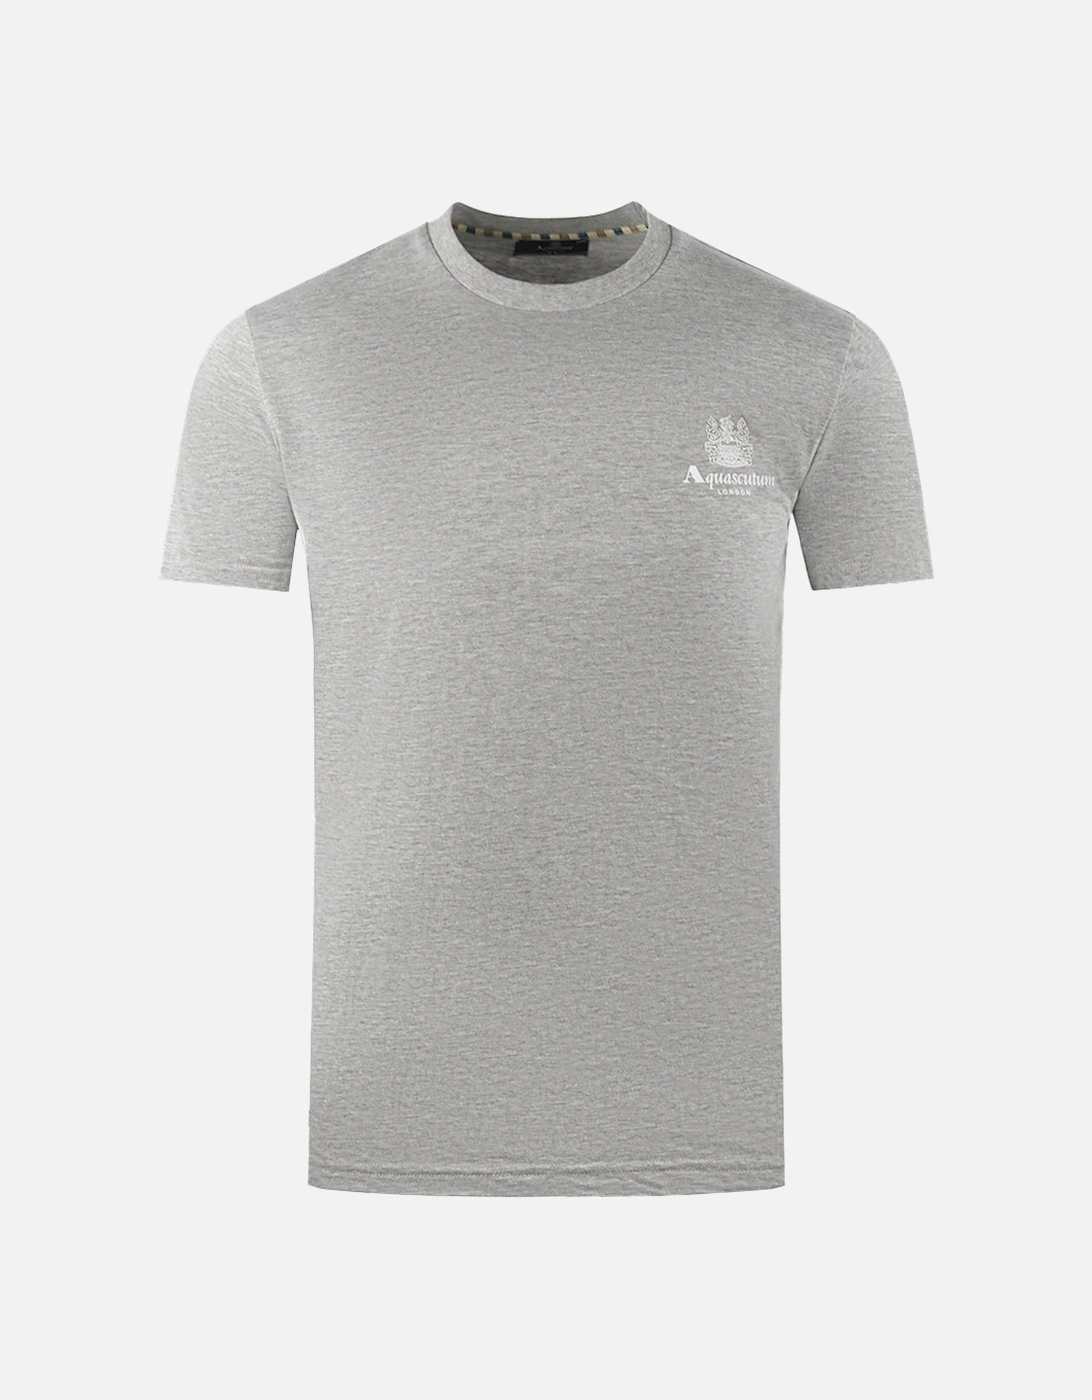 London Aldis Brand Logo On Chest Grey T-Shirt, 3 of 2